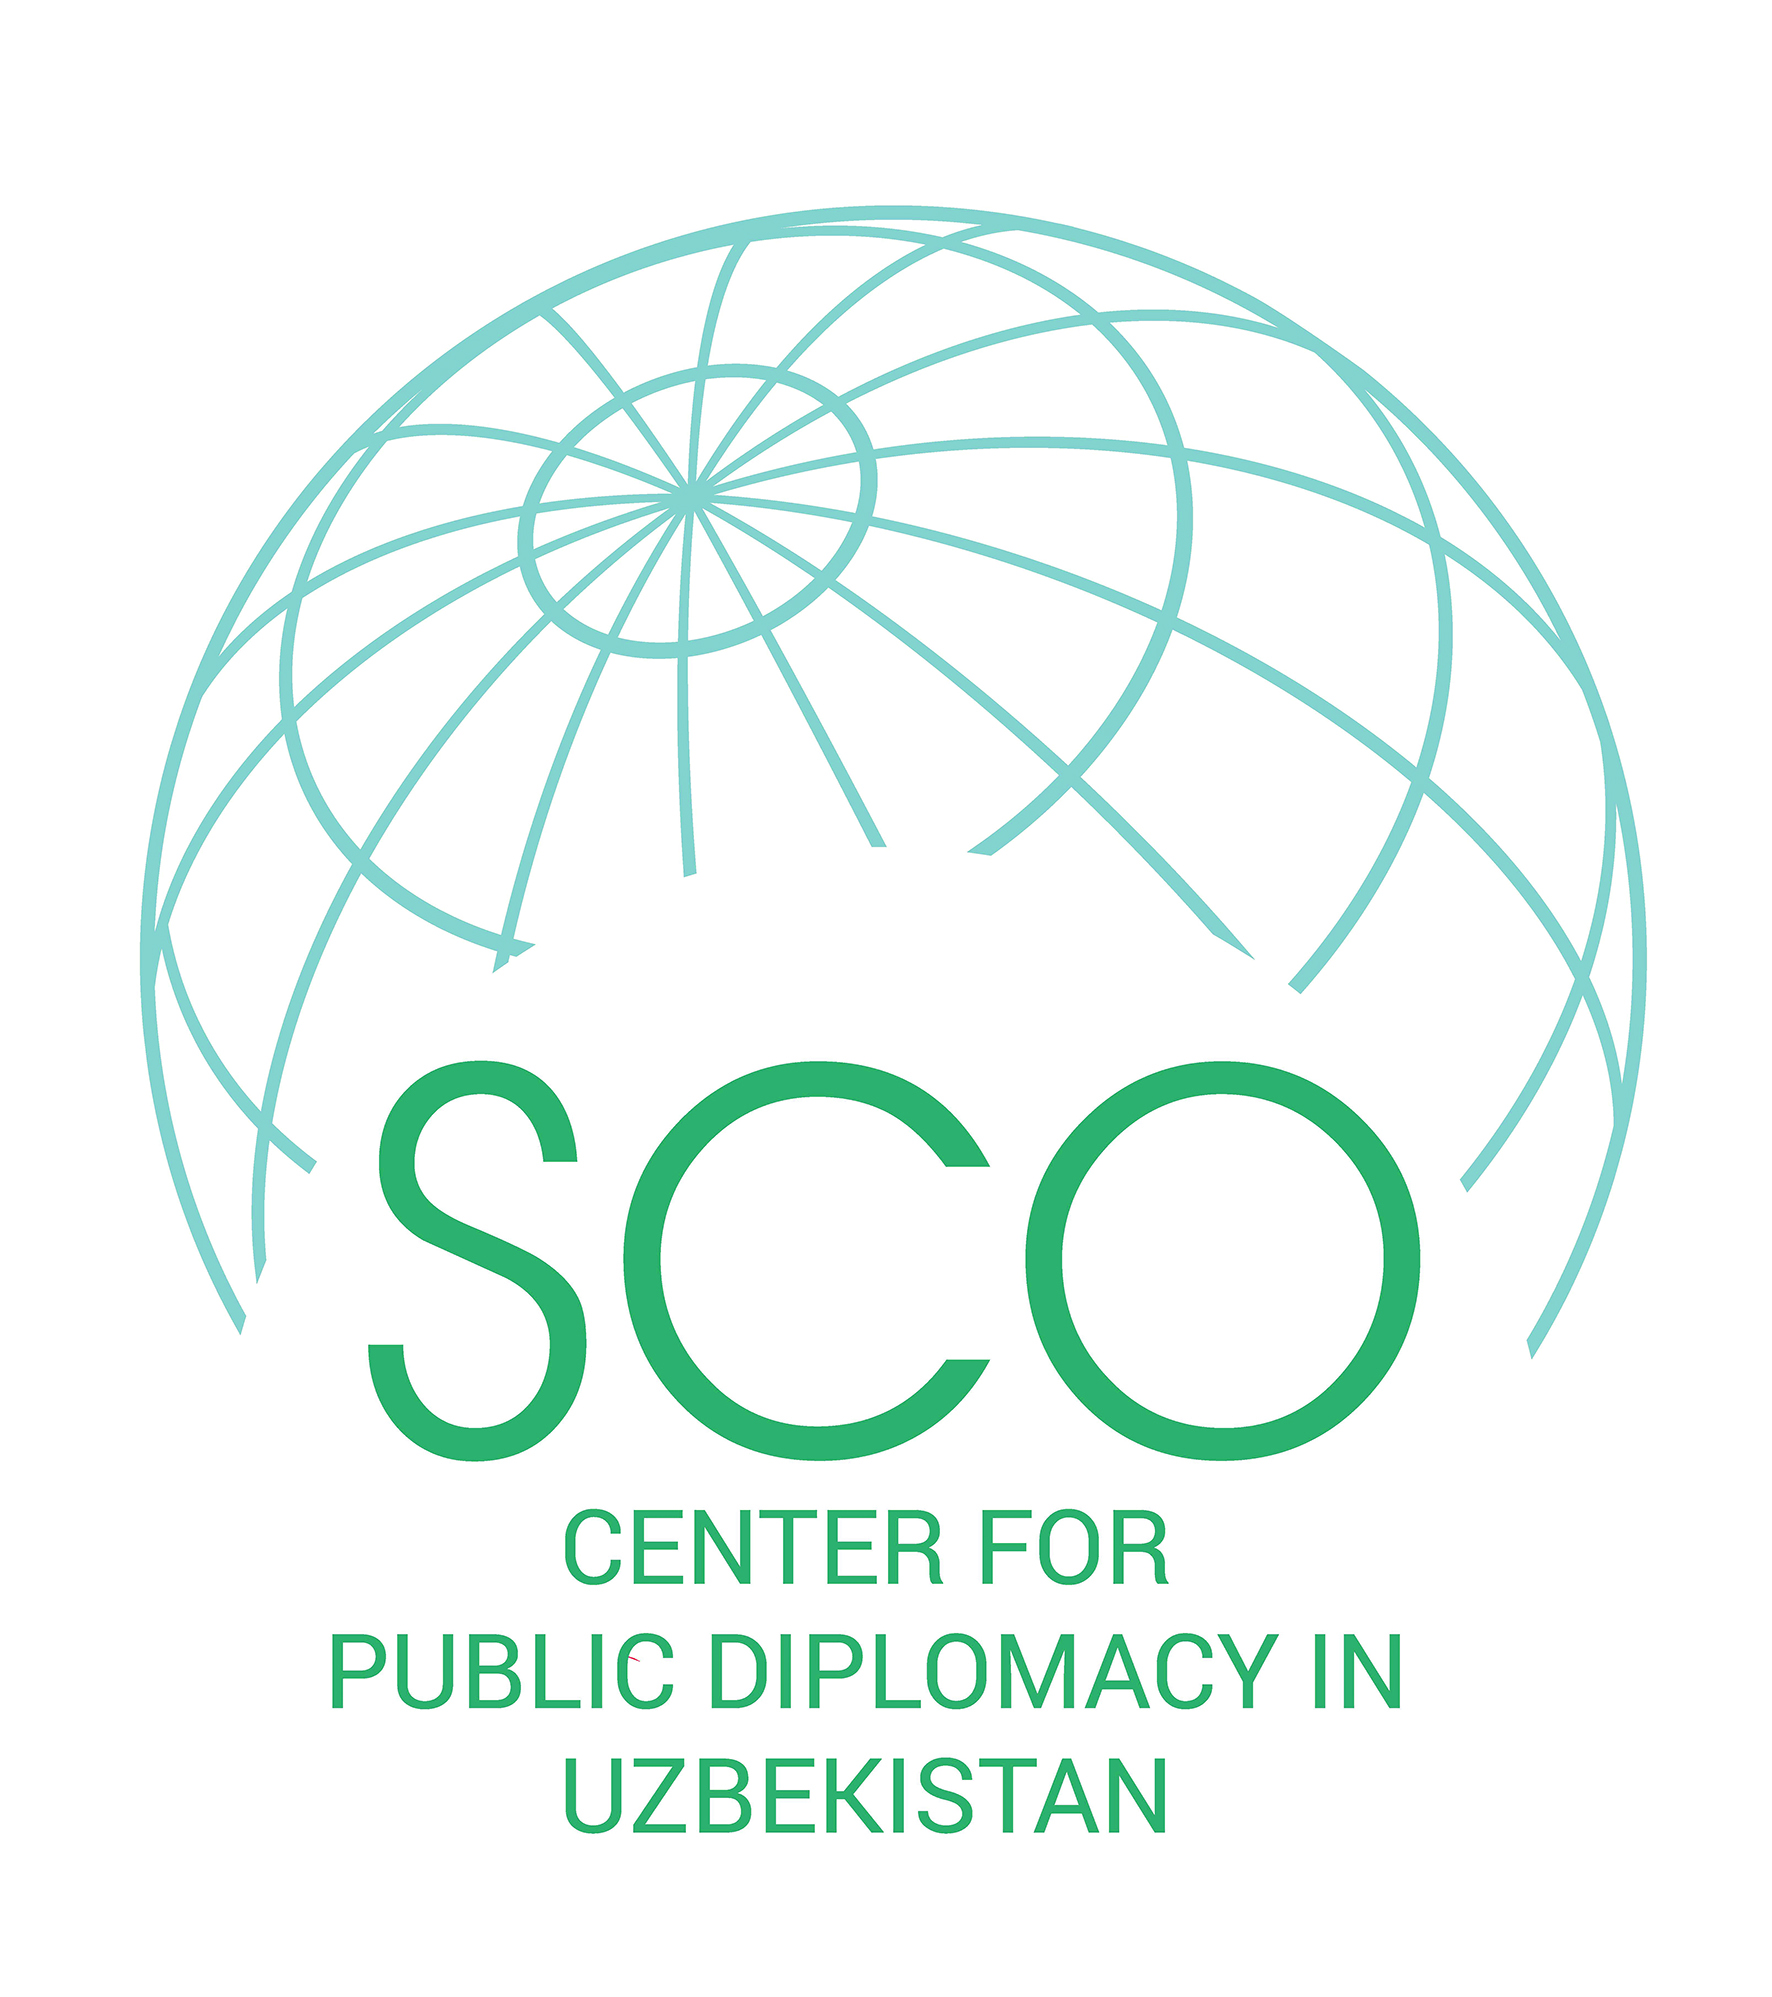 Center for Public Diplomacy of the Shanghai Cooperation Organization in Uzbekistan